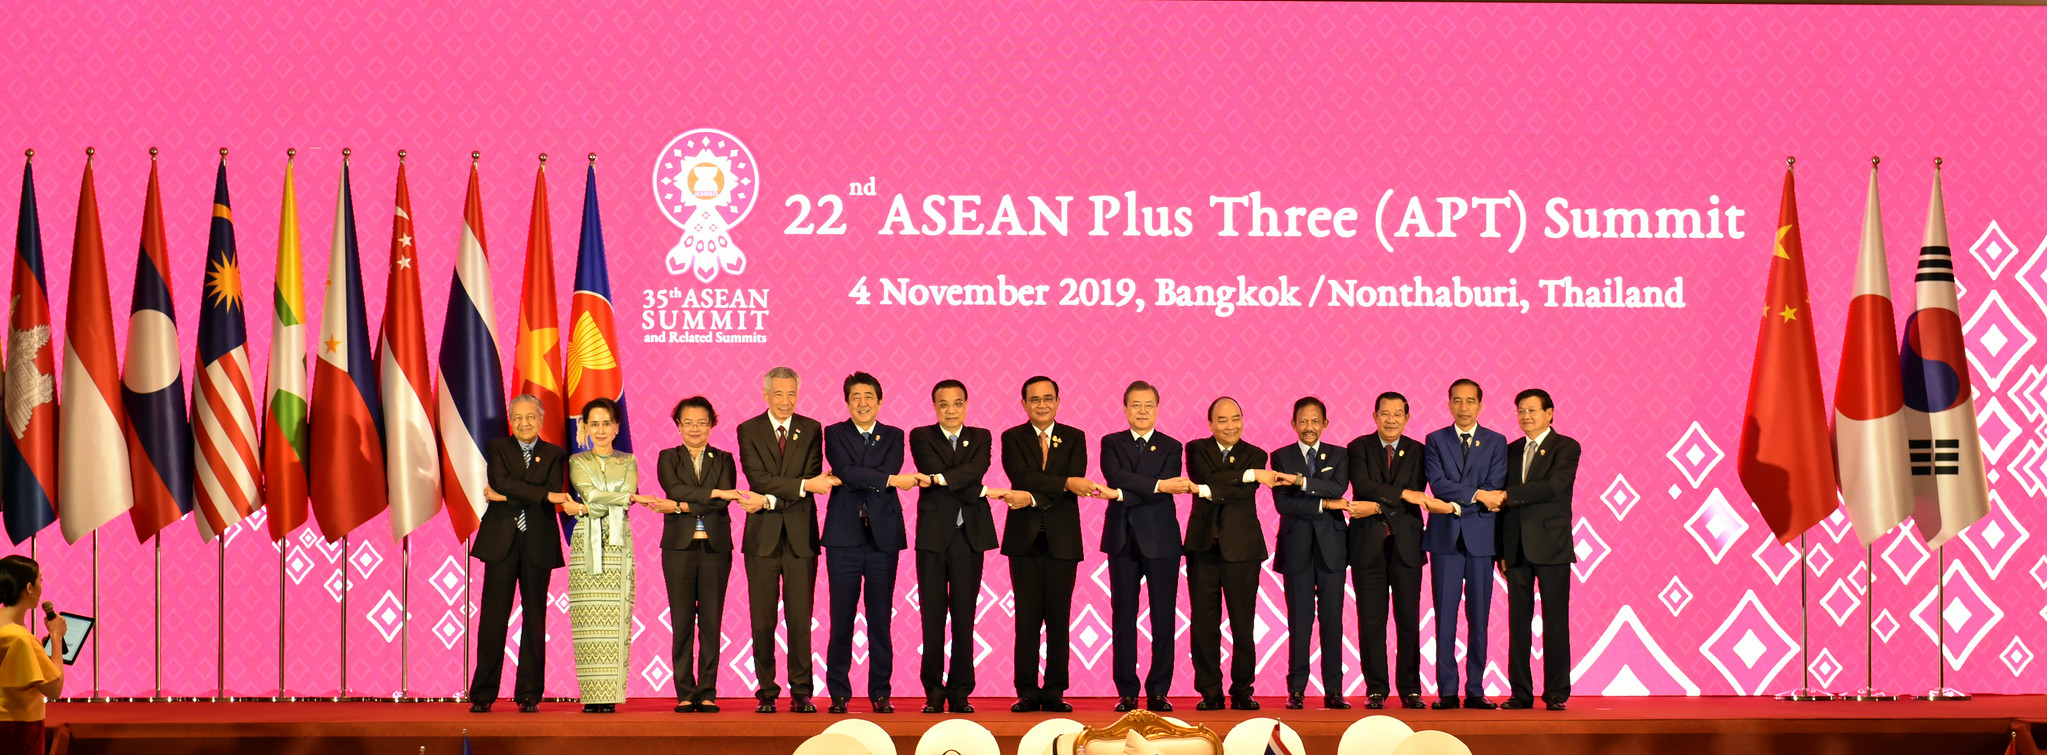 Chairman's Statement of the 22nd ASEAN Plus Three Summit - ASEAN Main Portal